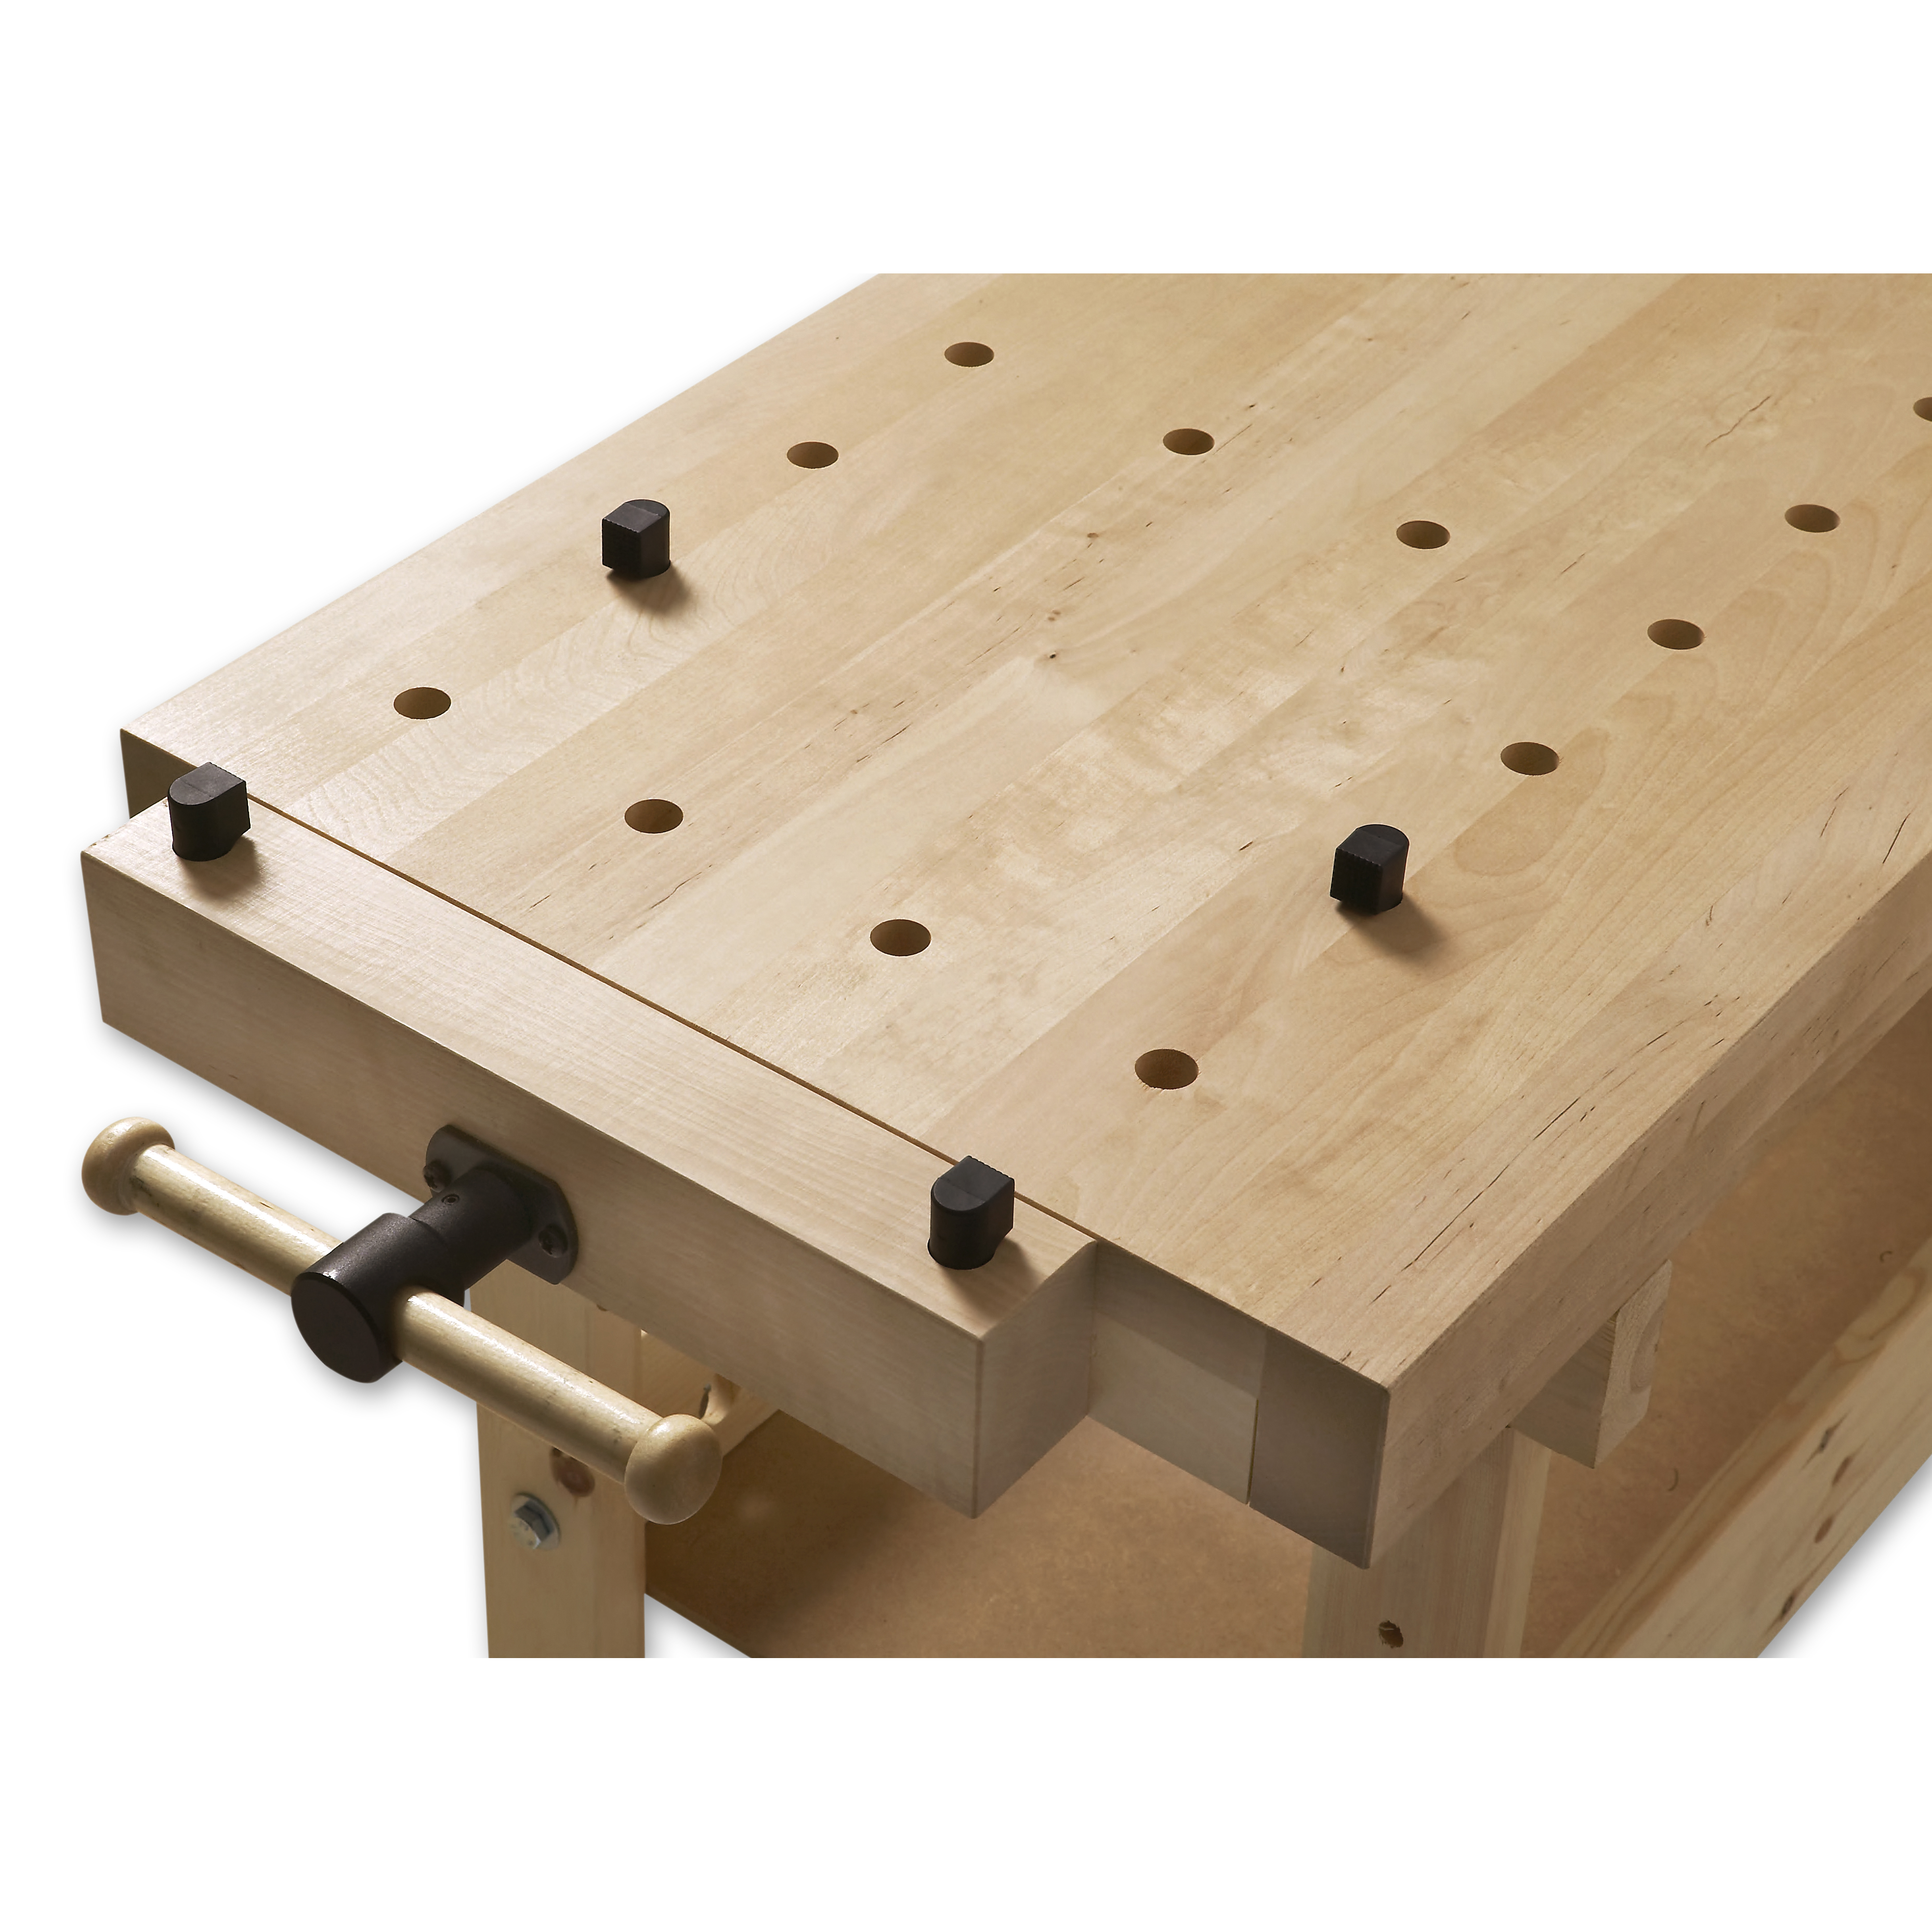 Sjobergs Nordic Plus Bench 1450 c/w Storage Module - Buy woodworking tools